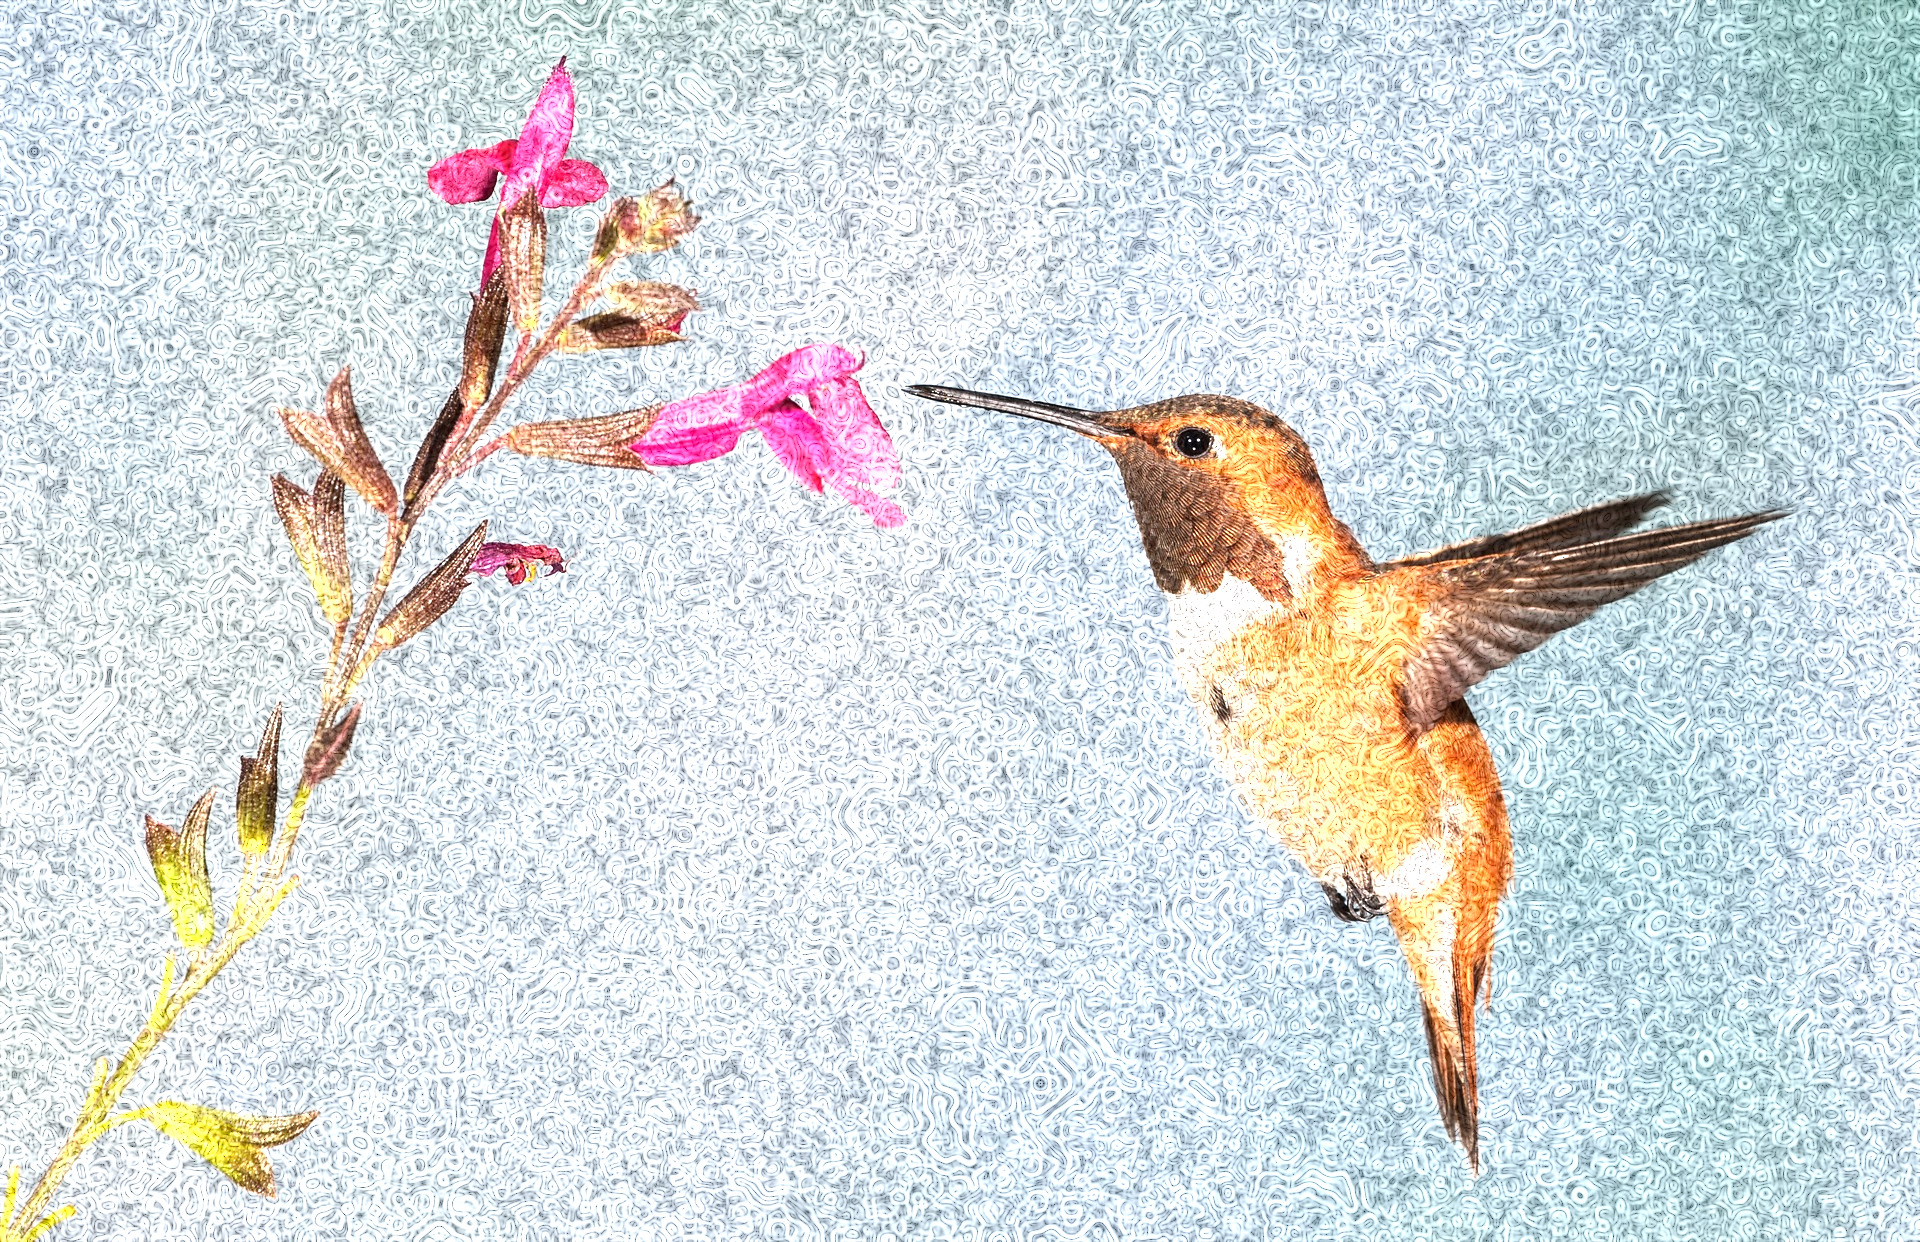 hummingbird-5255827_1920 (texturized with whirls).jpg